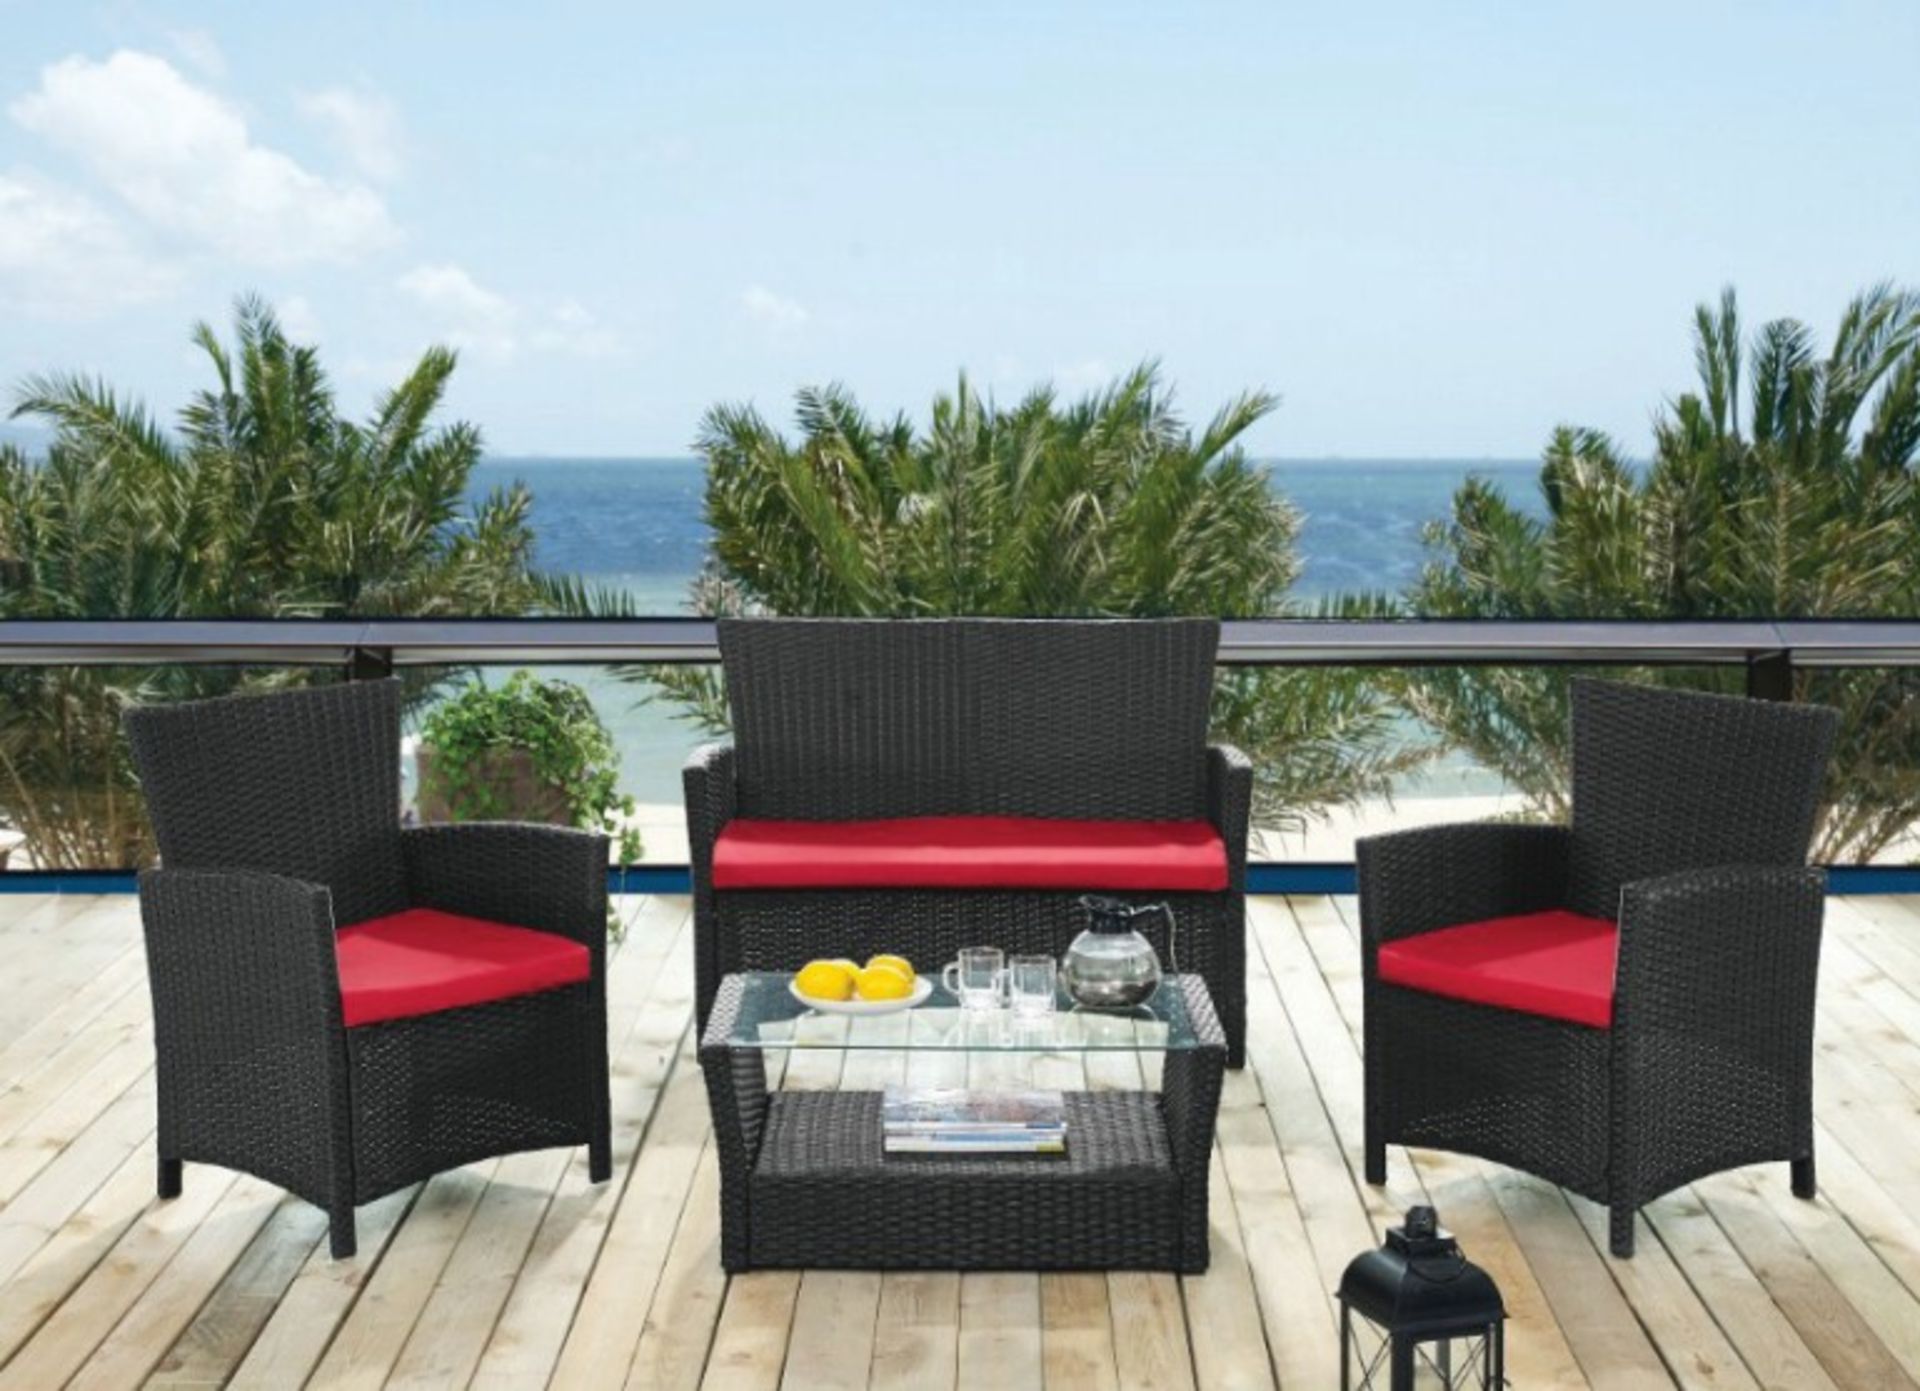 V *TRADE QTY* Brand New 4 Piece Rattan Garden Lounge Set inc 2 x chairs (60x64x81cm) - 1 x coffee